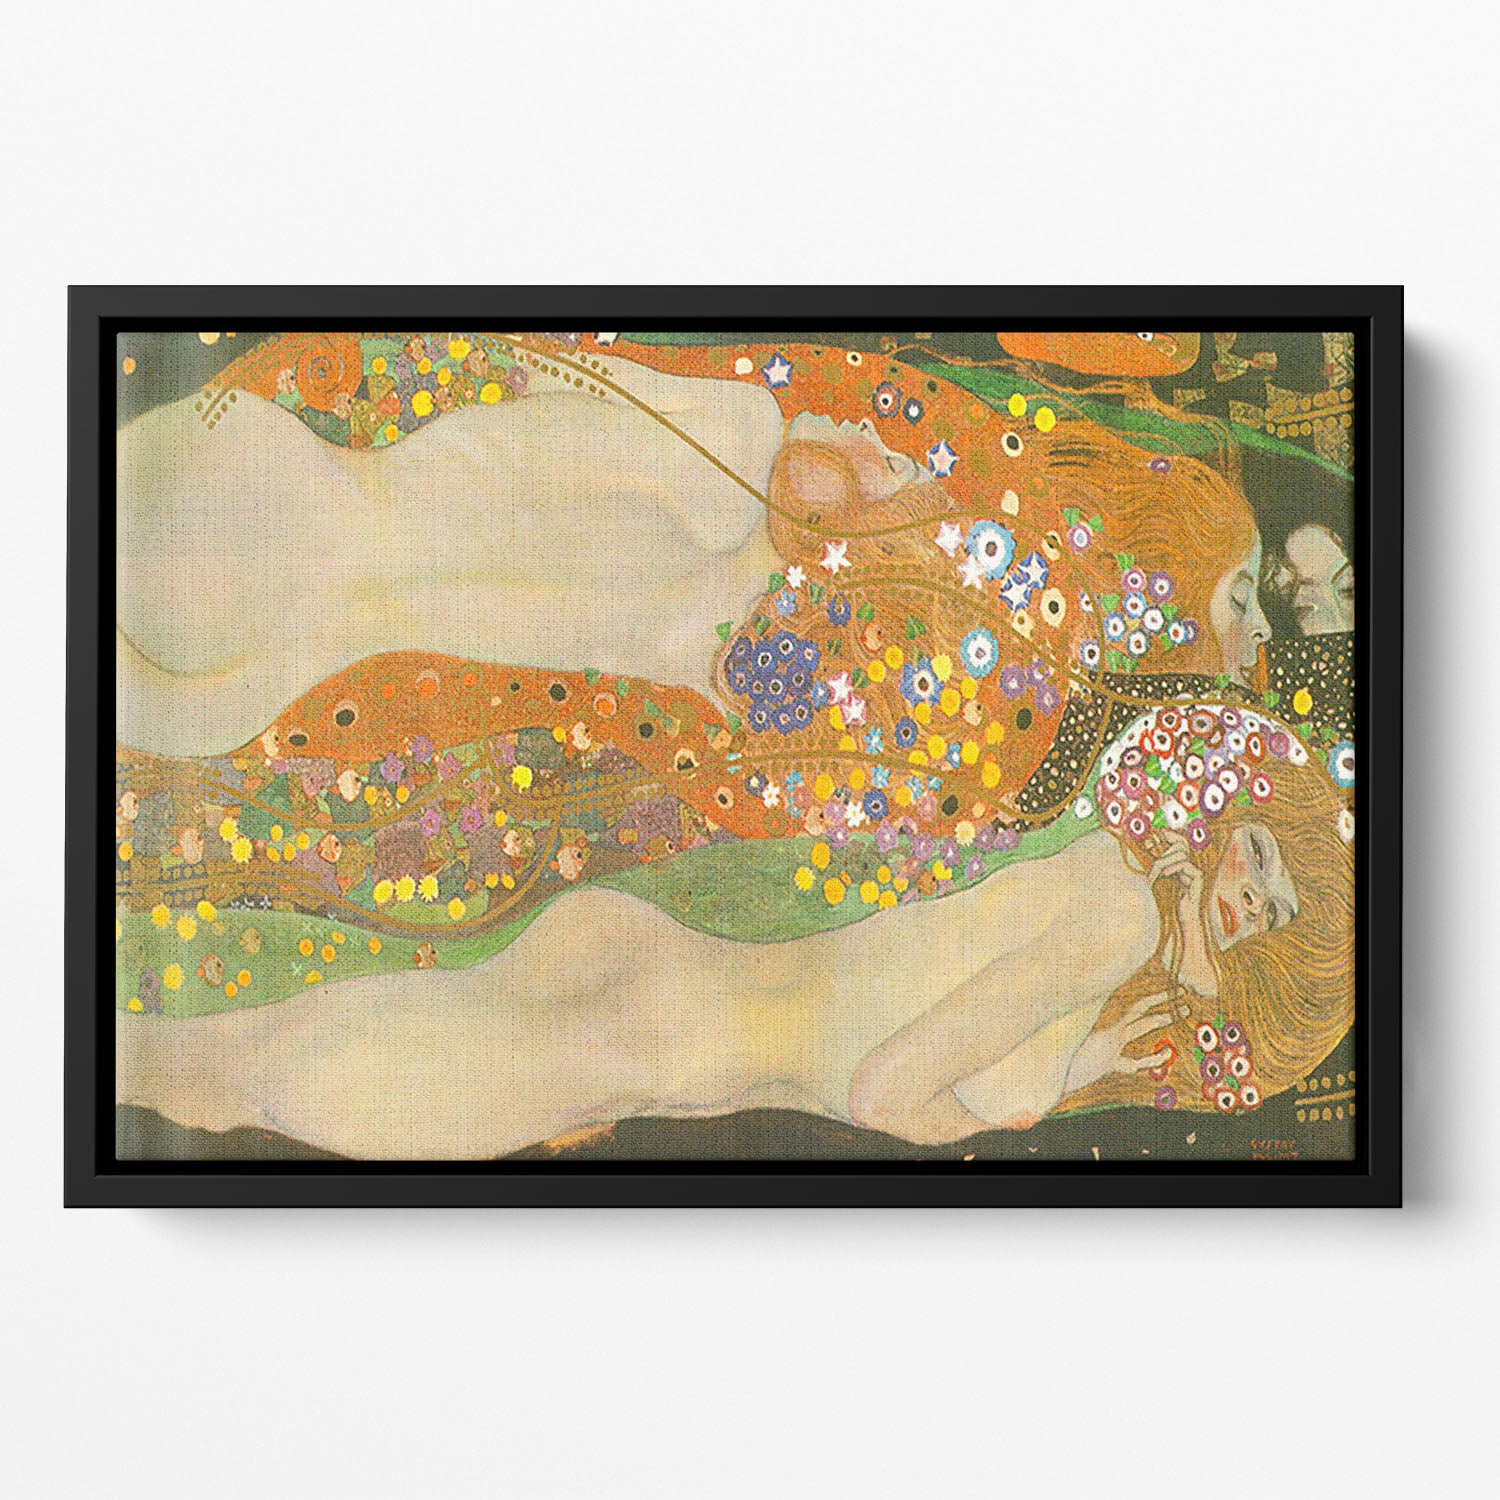 Water snakes friends II by Klimt Floating Framed Canvas